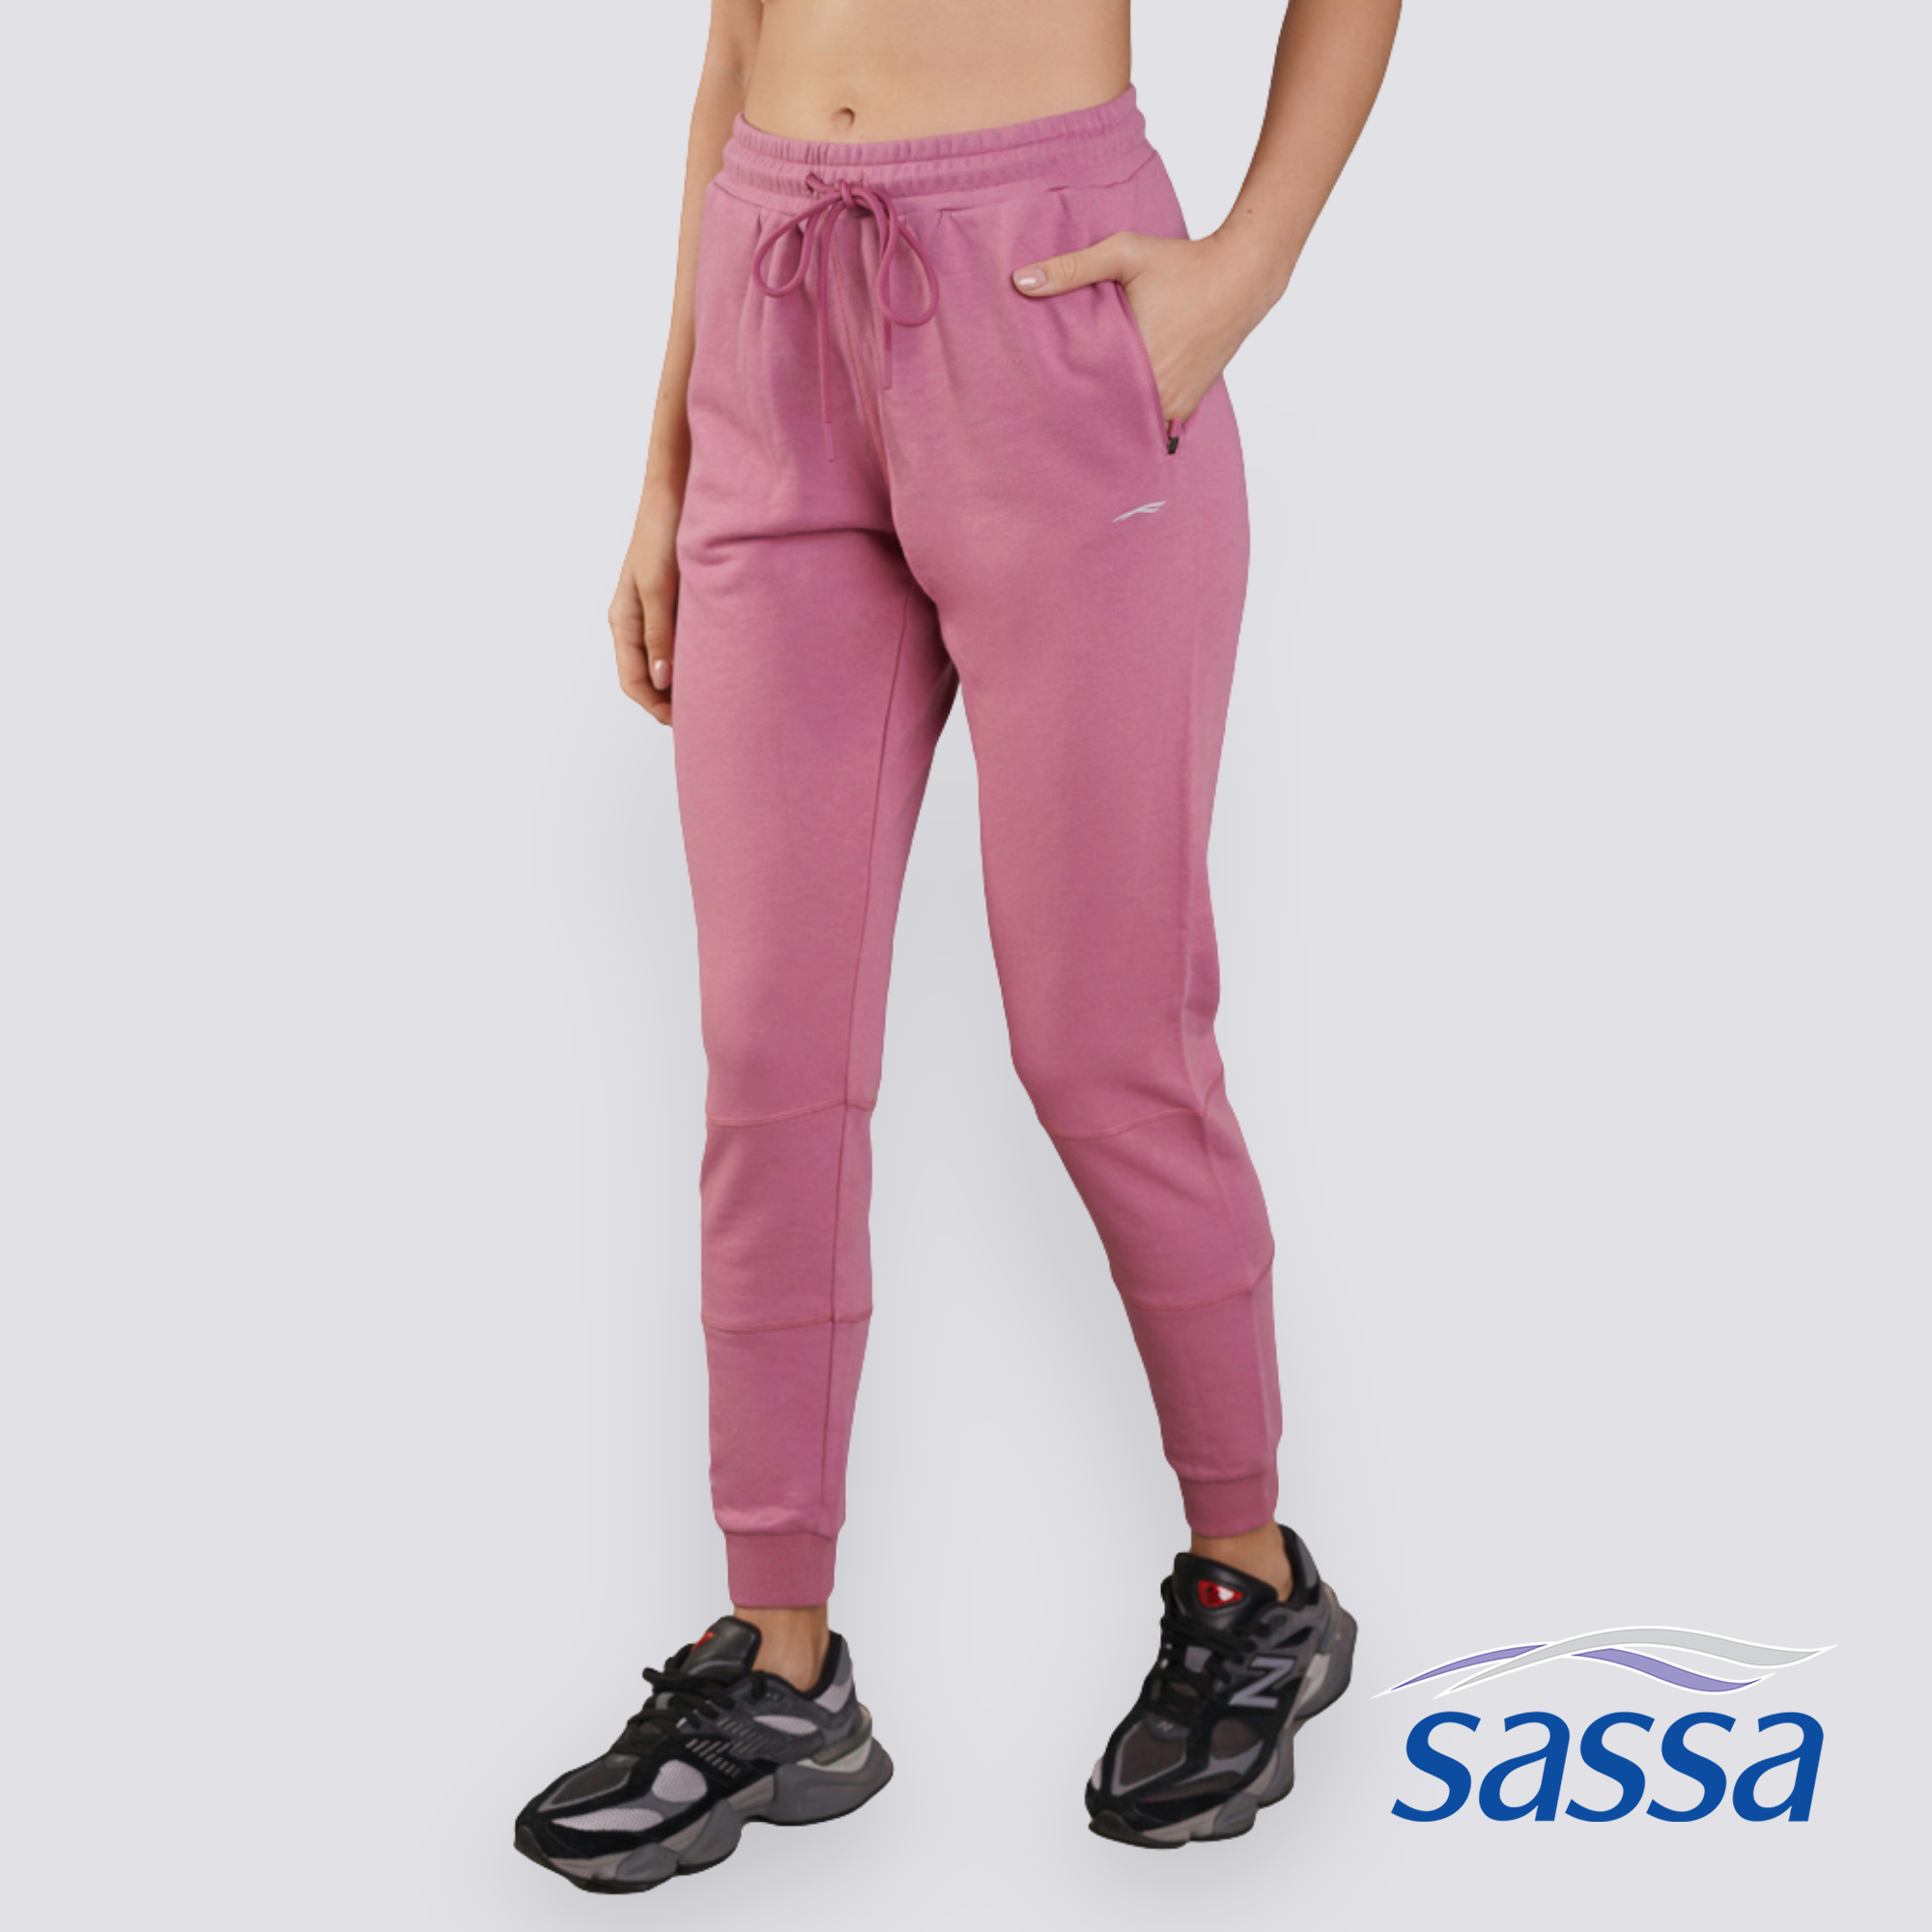 Buy Sassa Relaxing Bliss Jogger Pants with Drawstring Women